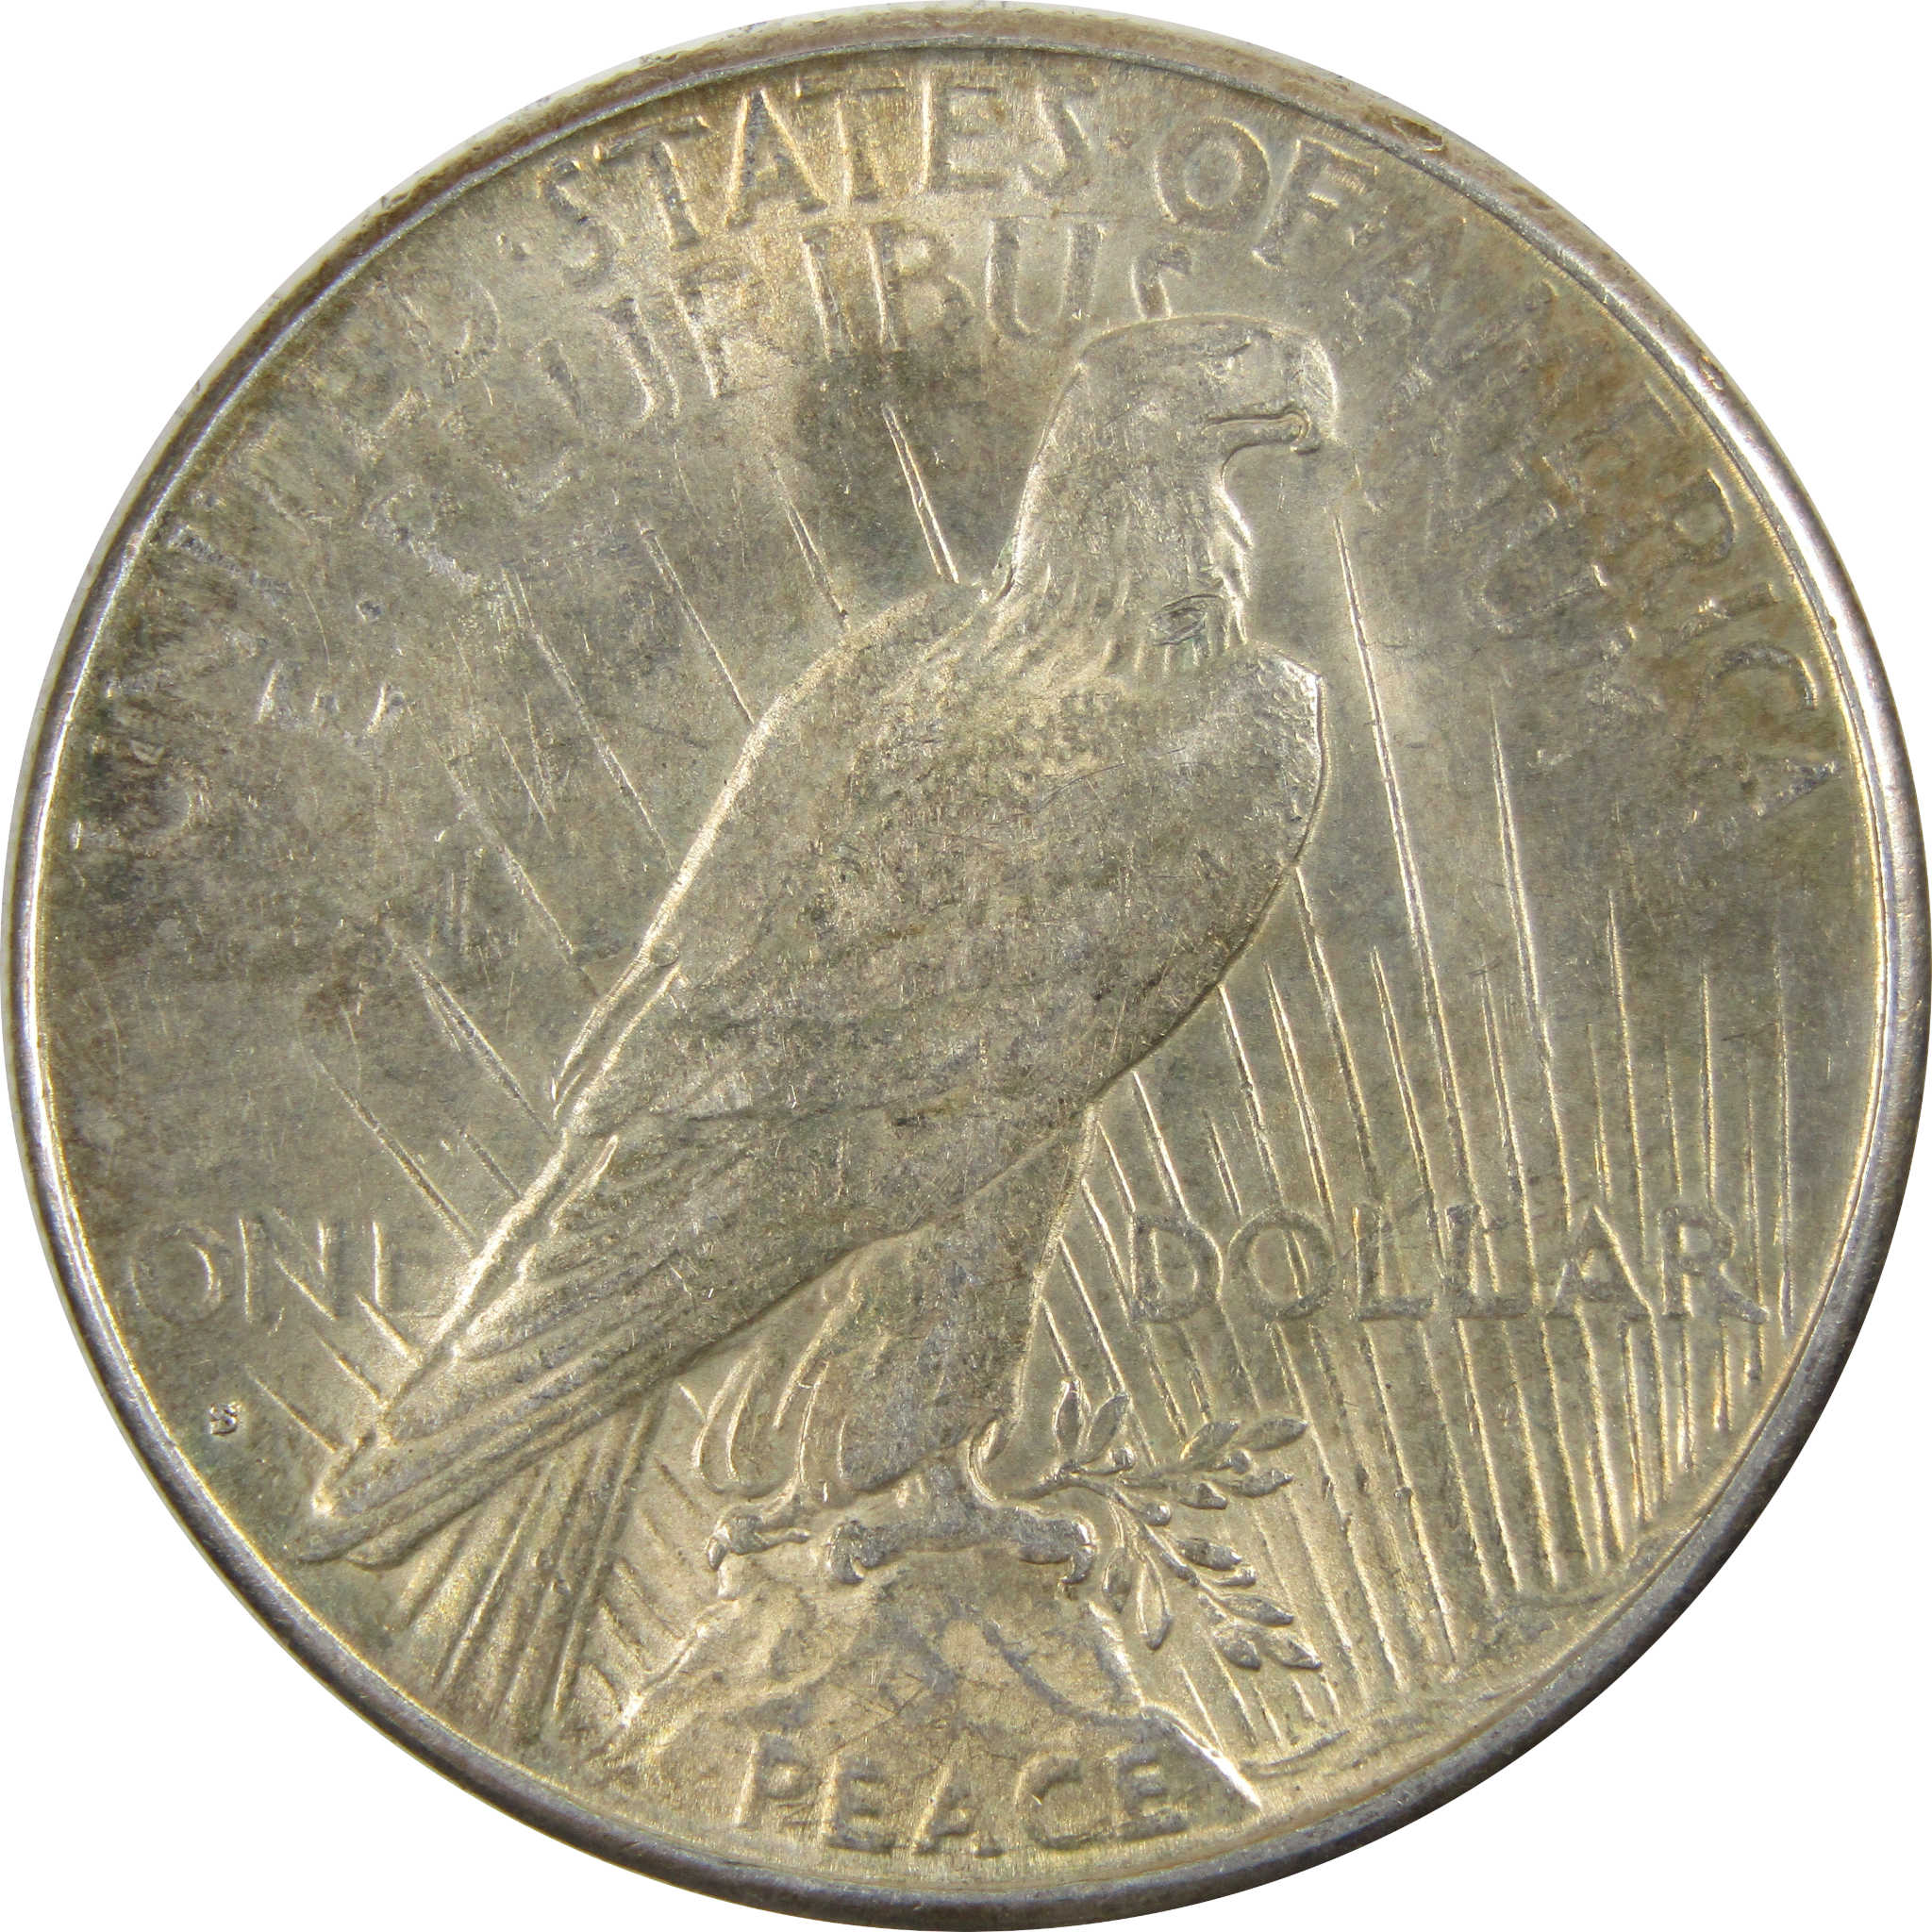 1928 S Peace Dollar Borderline Uncirculated 90% Silver $ SKU:I7853